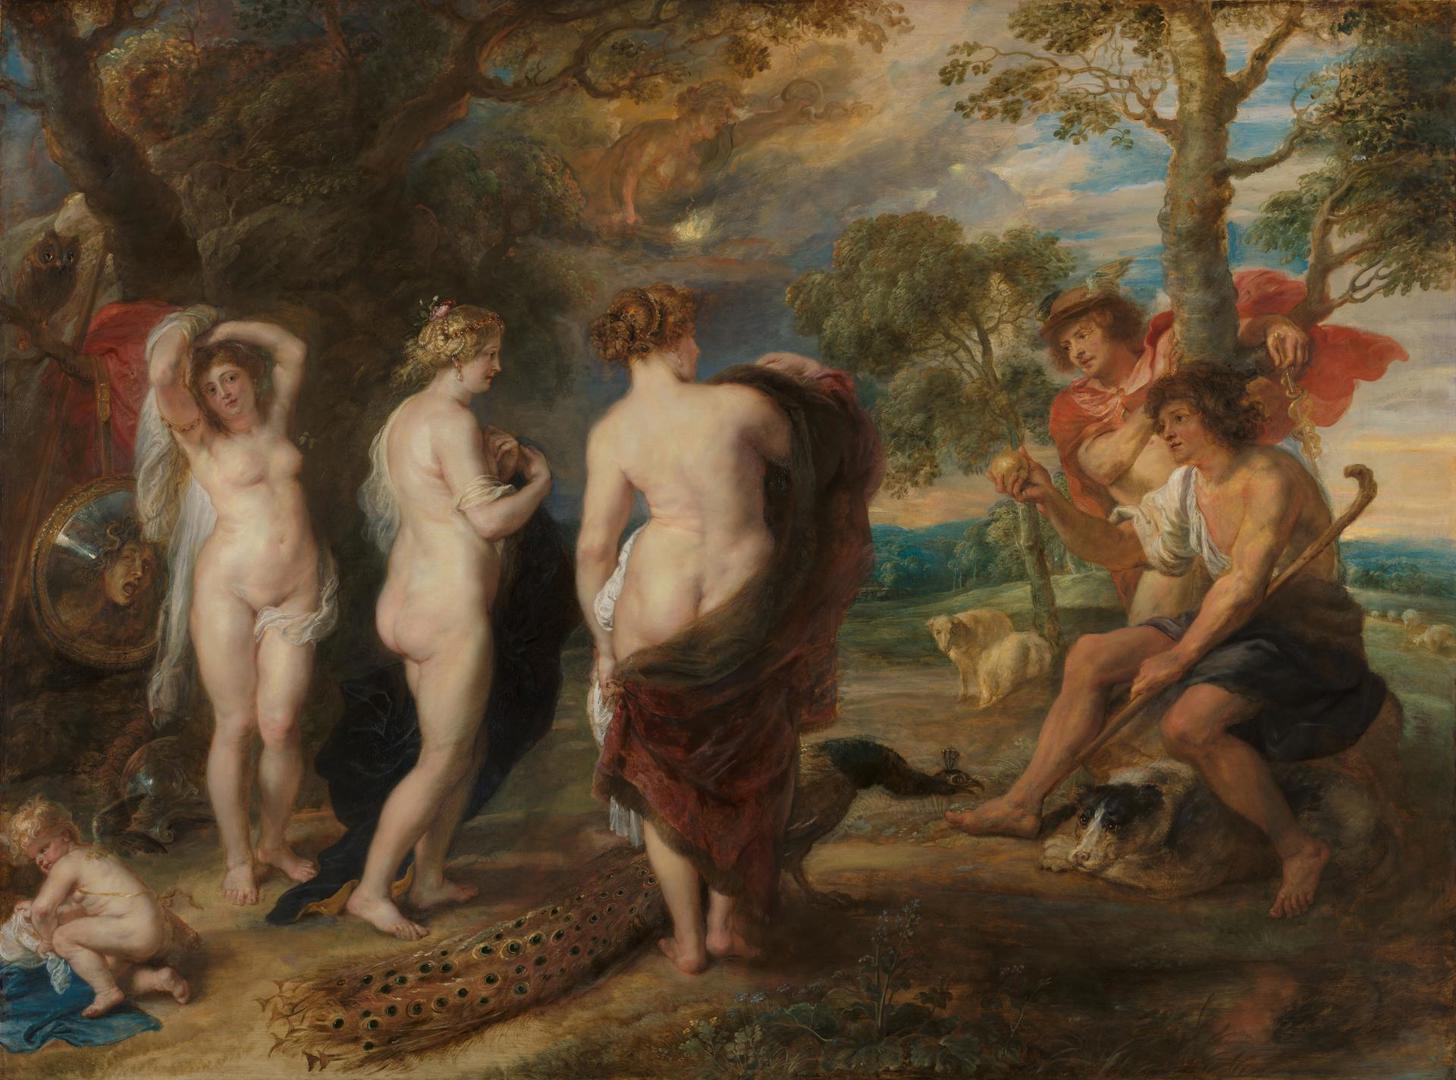 The Judgement of Paris by Peter Paul Rubens